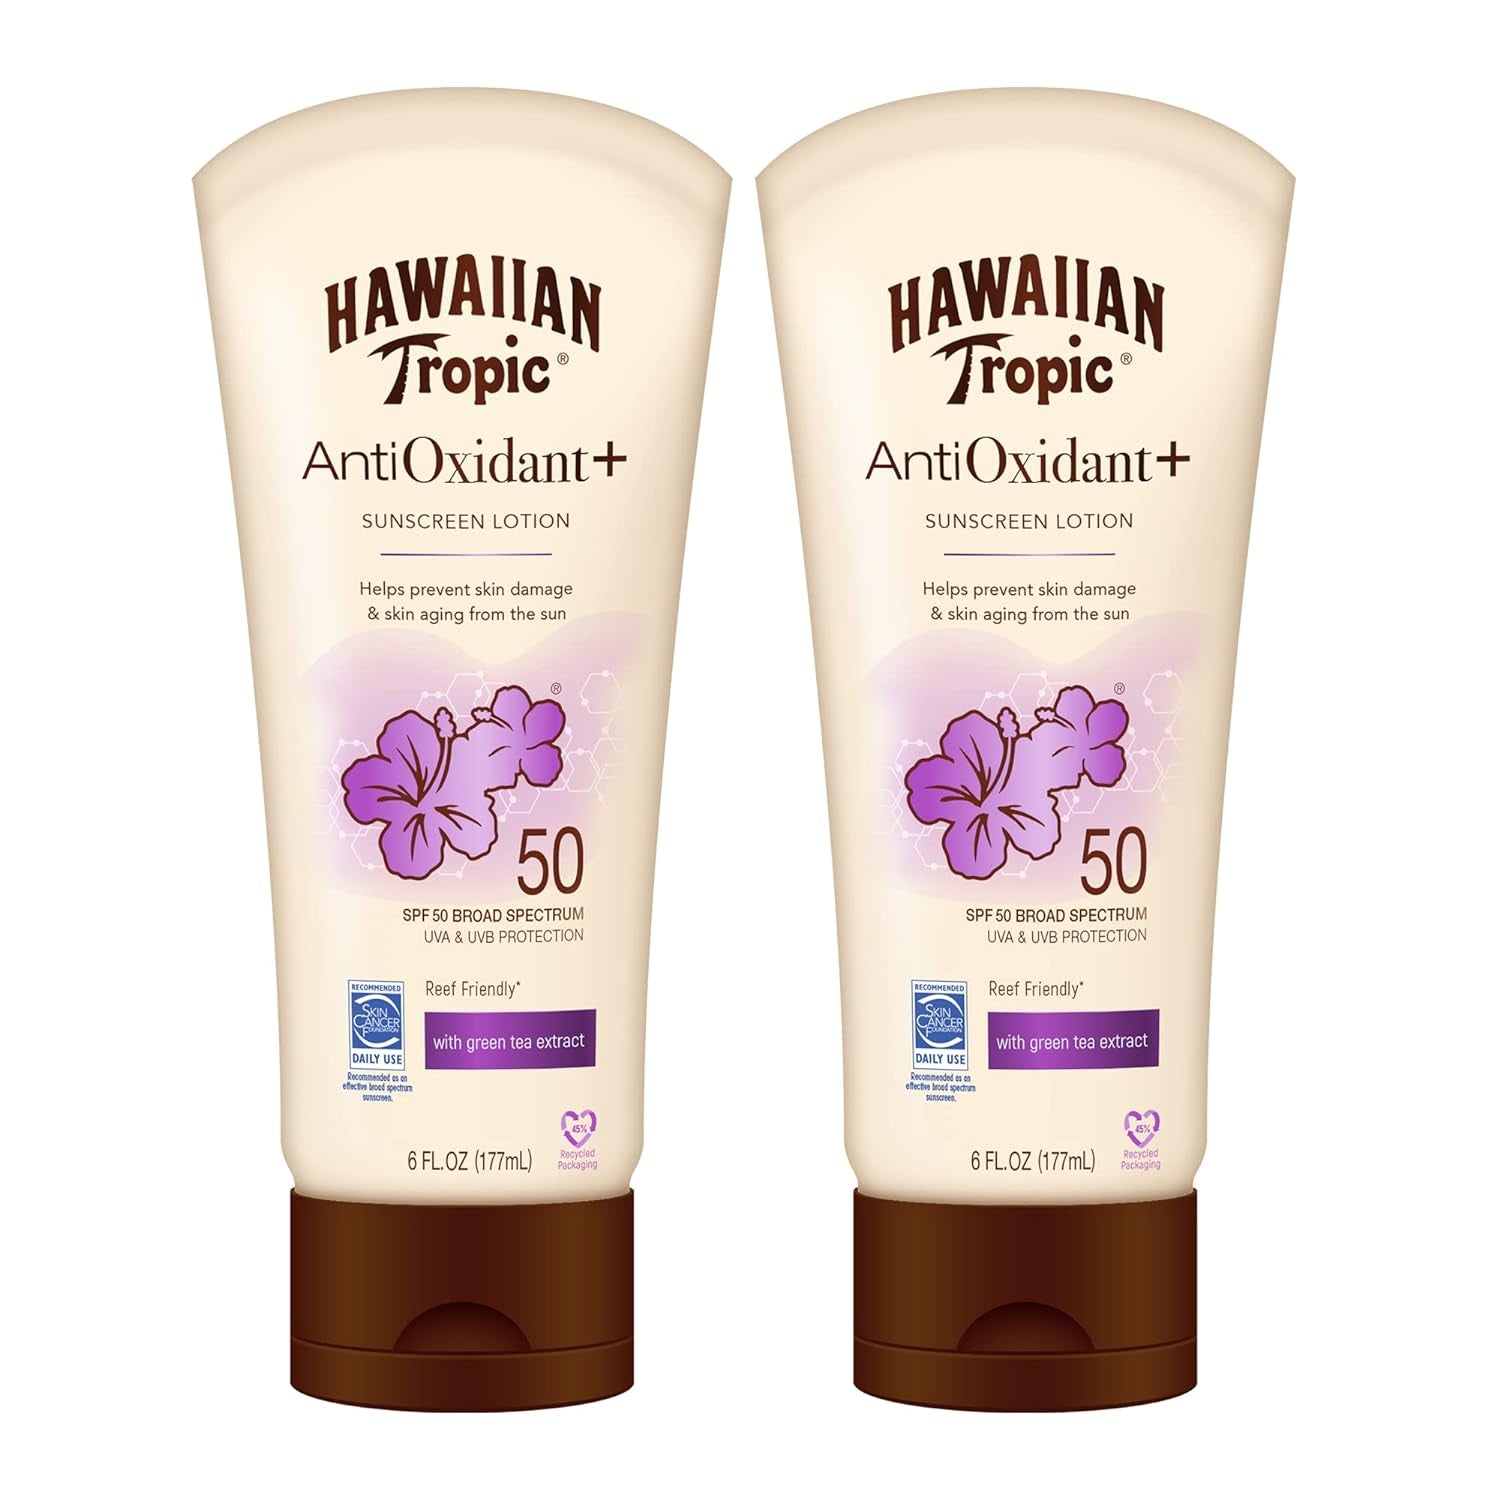 "2-Pack Hawaiian Tropic SPF 50 Sunscreen Lotion with Green Tea Extract, 6Oz Each"